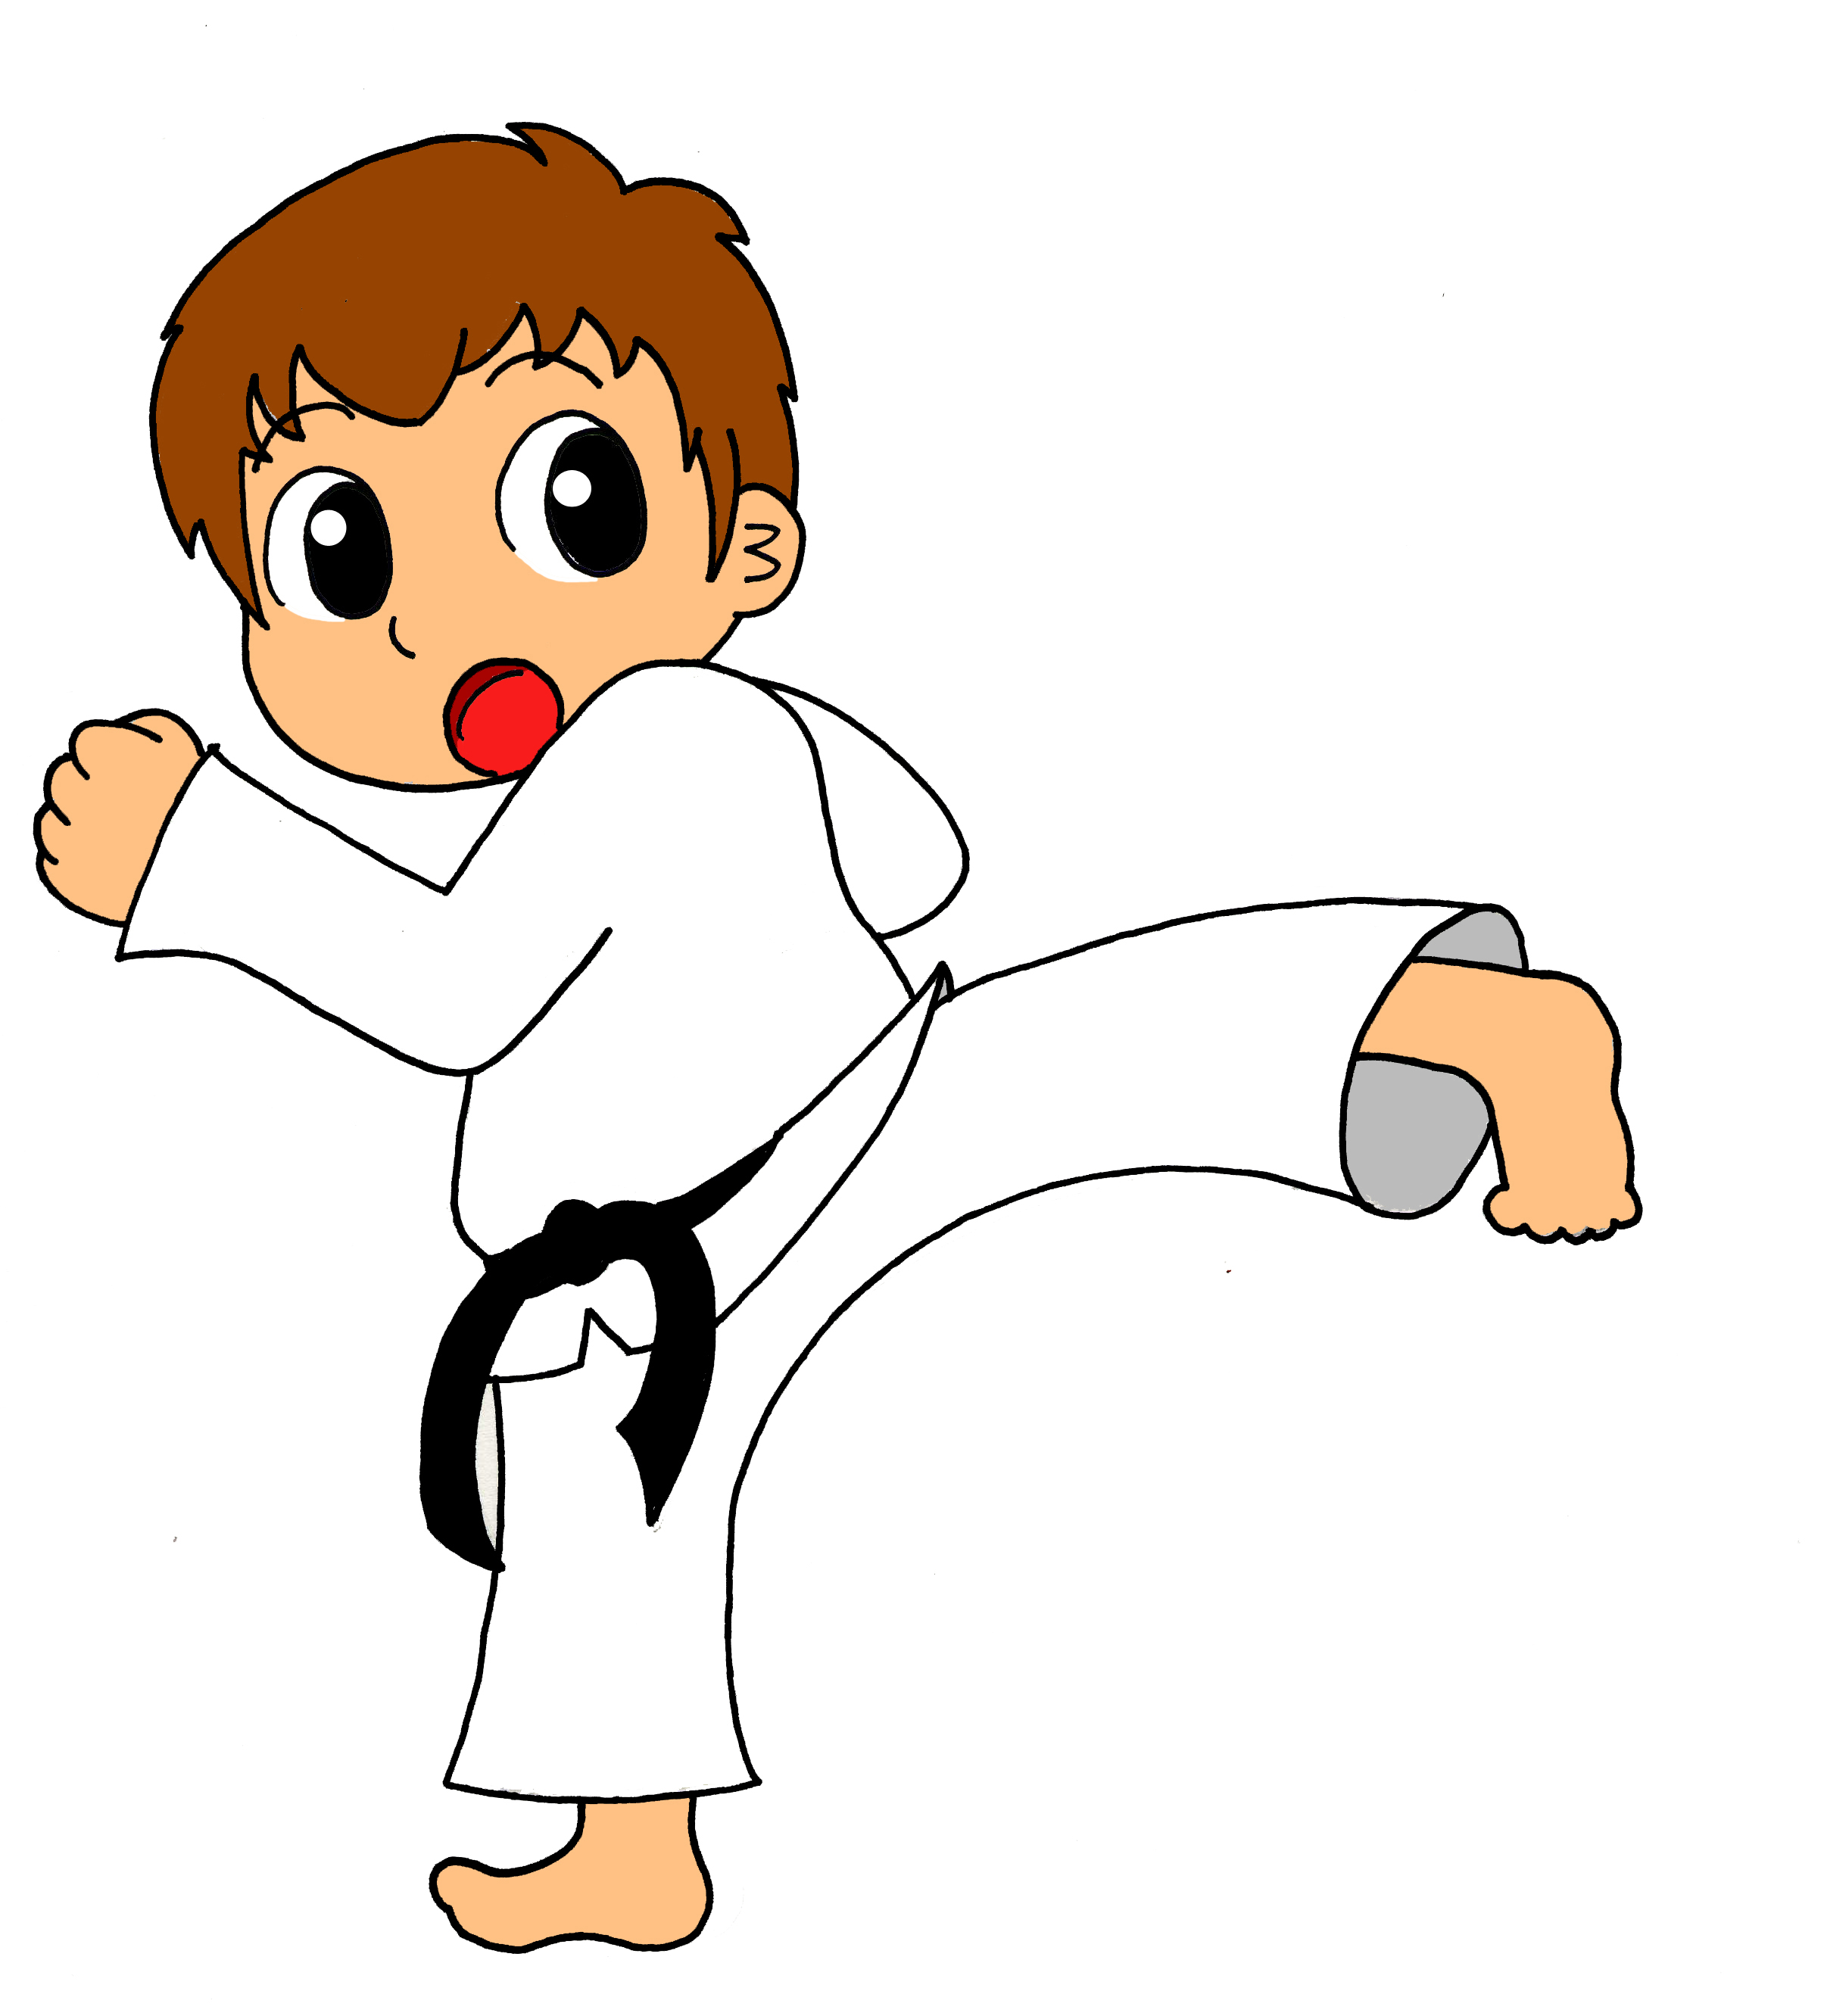 ... taekwondo martial art